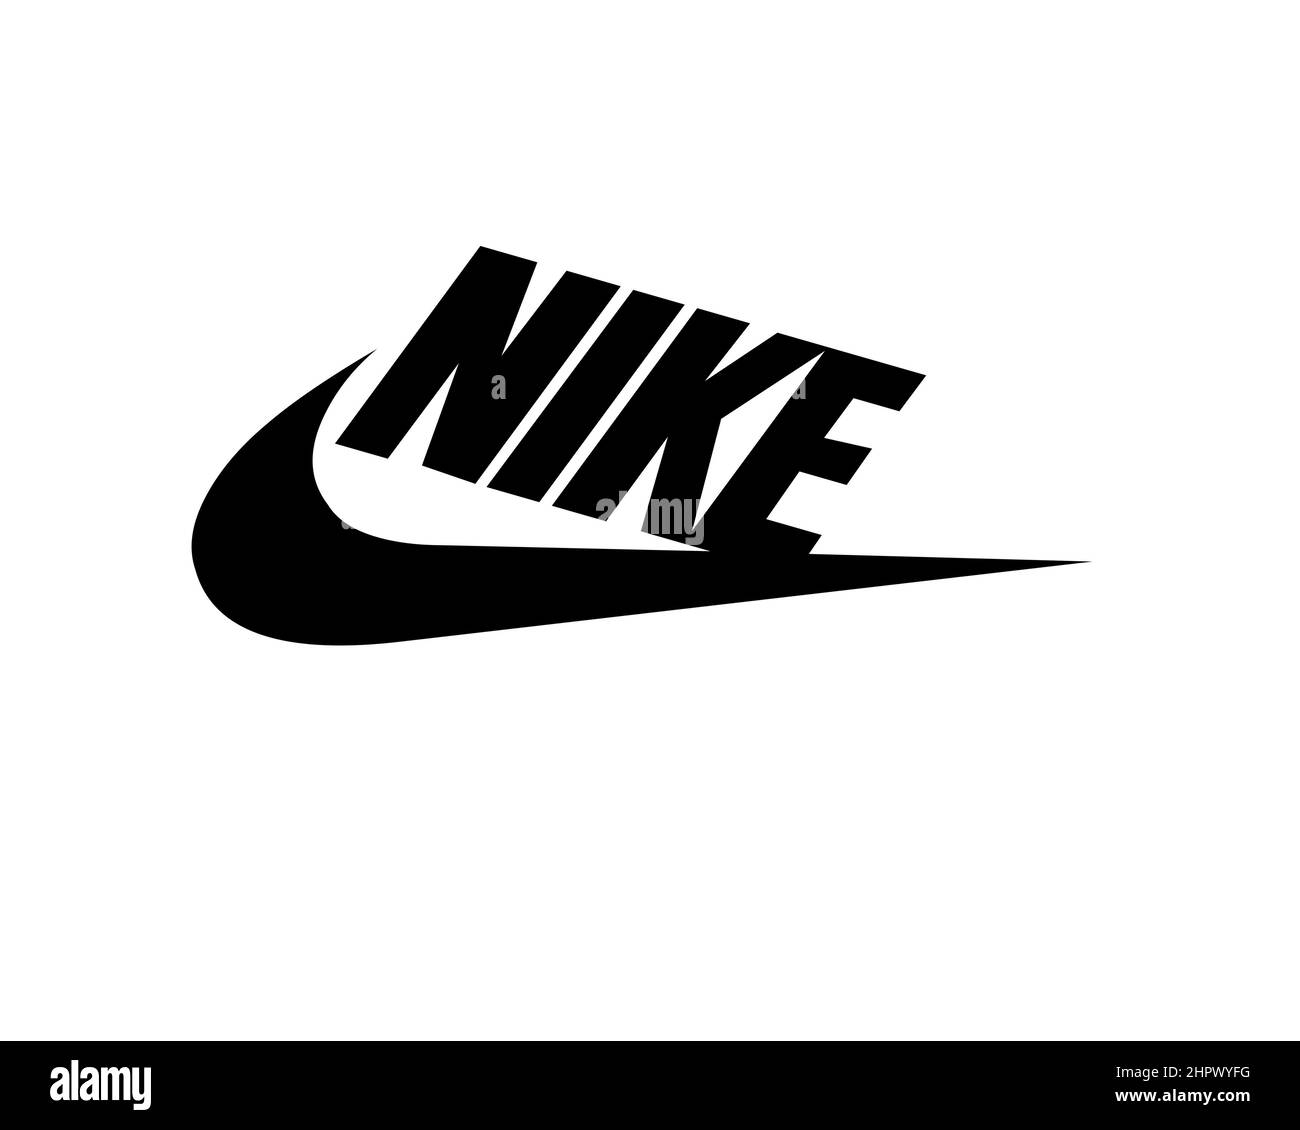 Tumor maligno neumonía Darse prisa Nike, Inc. Nike, rotated, white background, logo, brand name Stock Photo -  Alamy